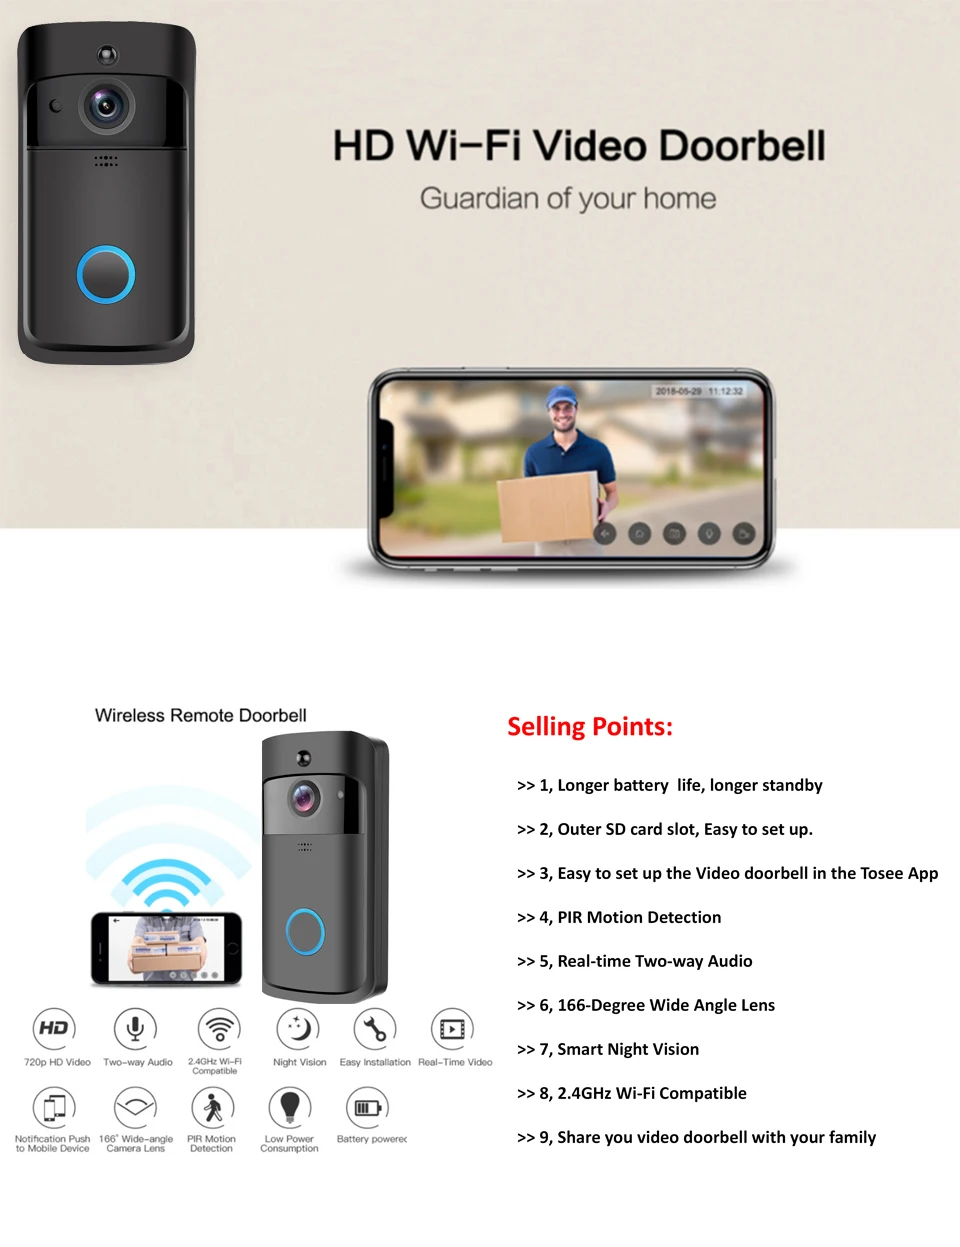 WiFi Video Doorbell V5 Black Smart IP Video Intercom WI-FI Video Door Phone For Apartments IR Alarm Wireless Security Camera